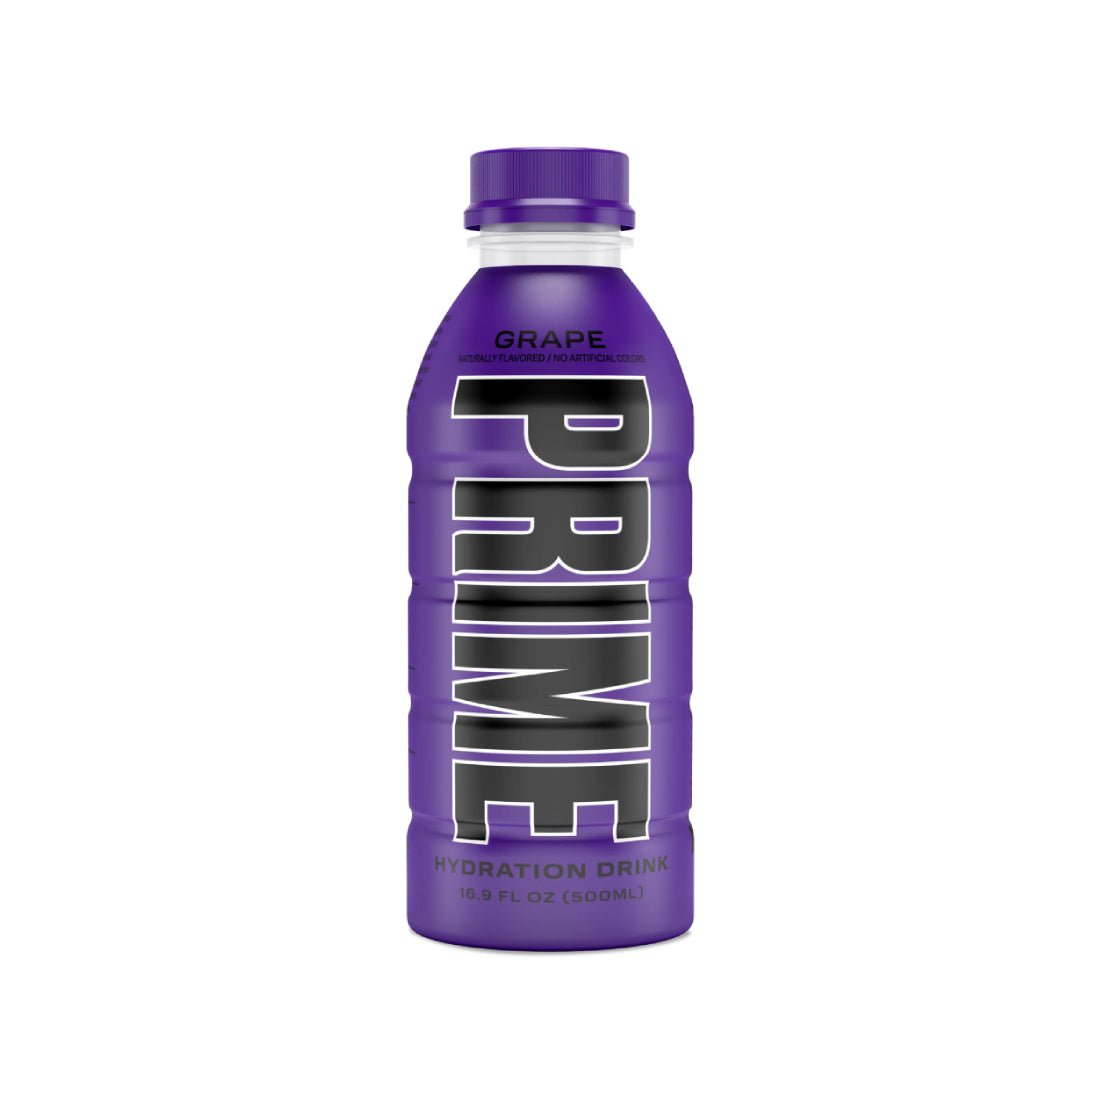 Prime Hydration Drink - Grape - مشروب هيدراتيه - Store 974 | ستور ٩٧٤